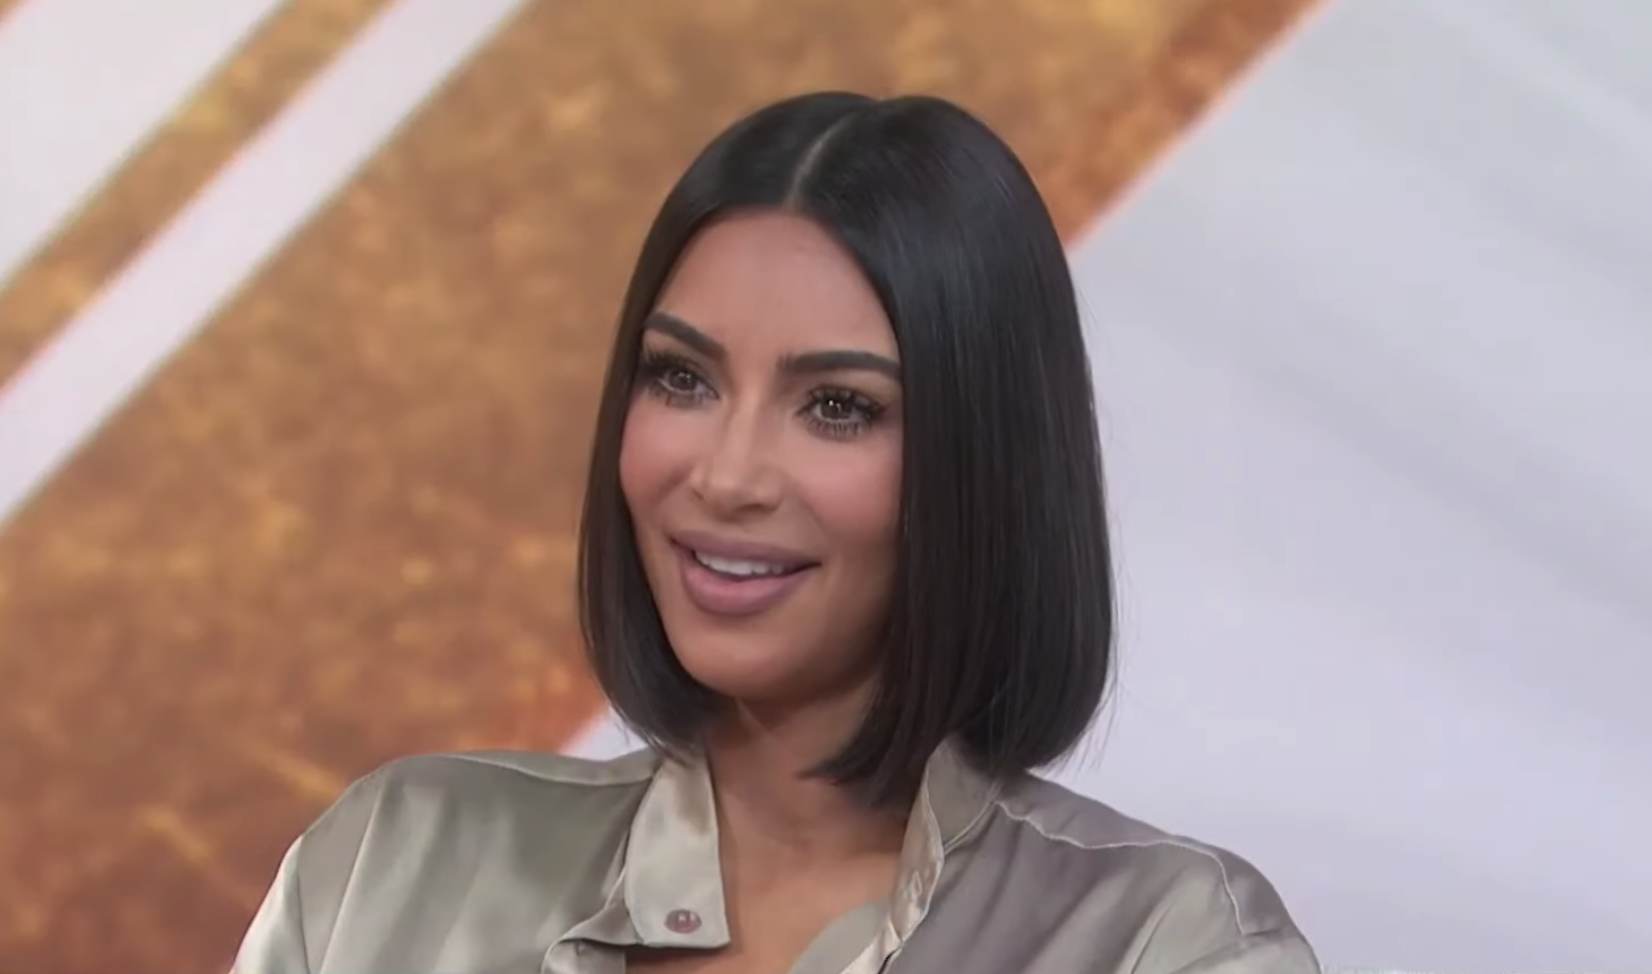 Kim Kardashian Wears Outfit By Dublin Designer To Launch New Skims Company